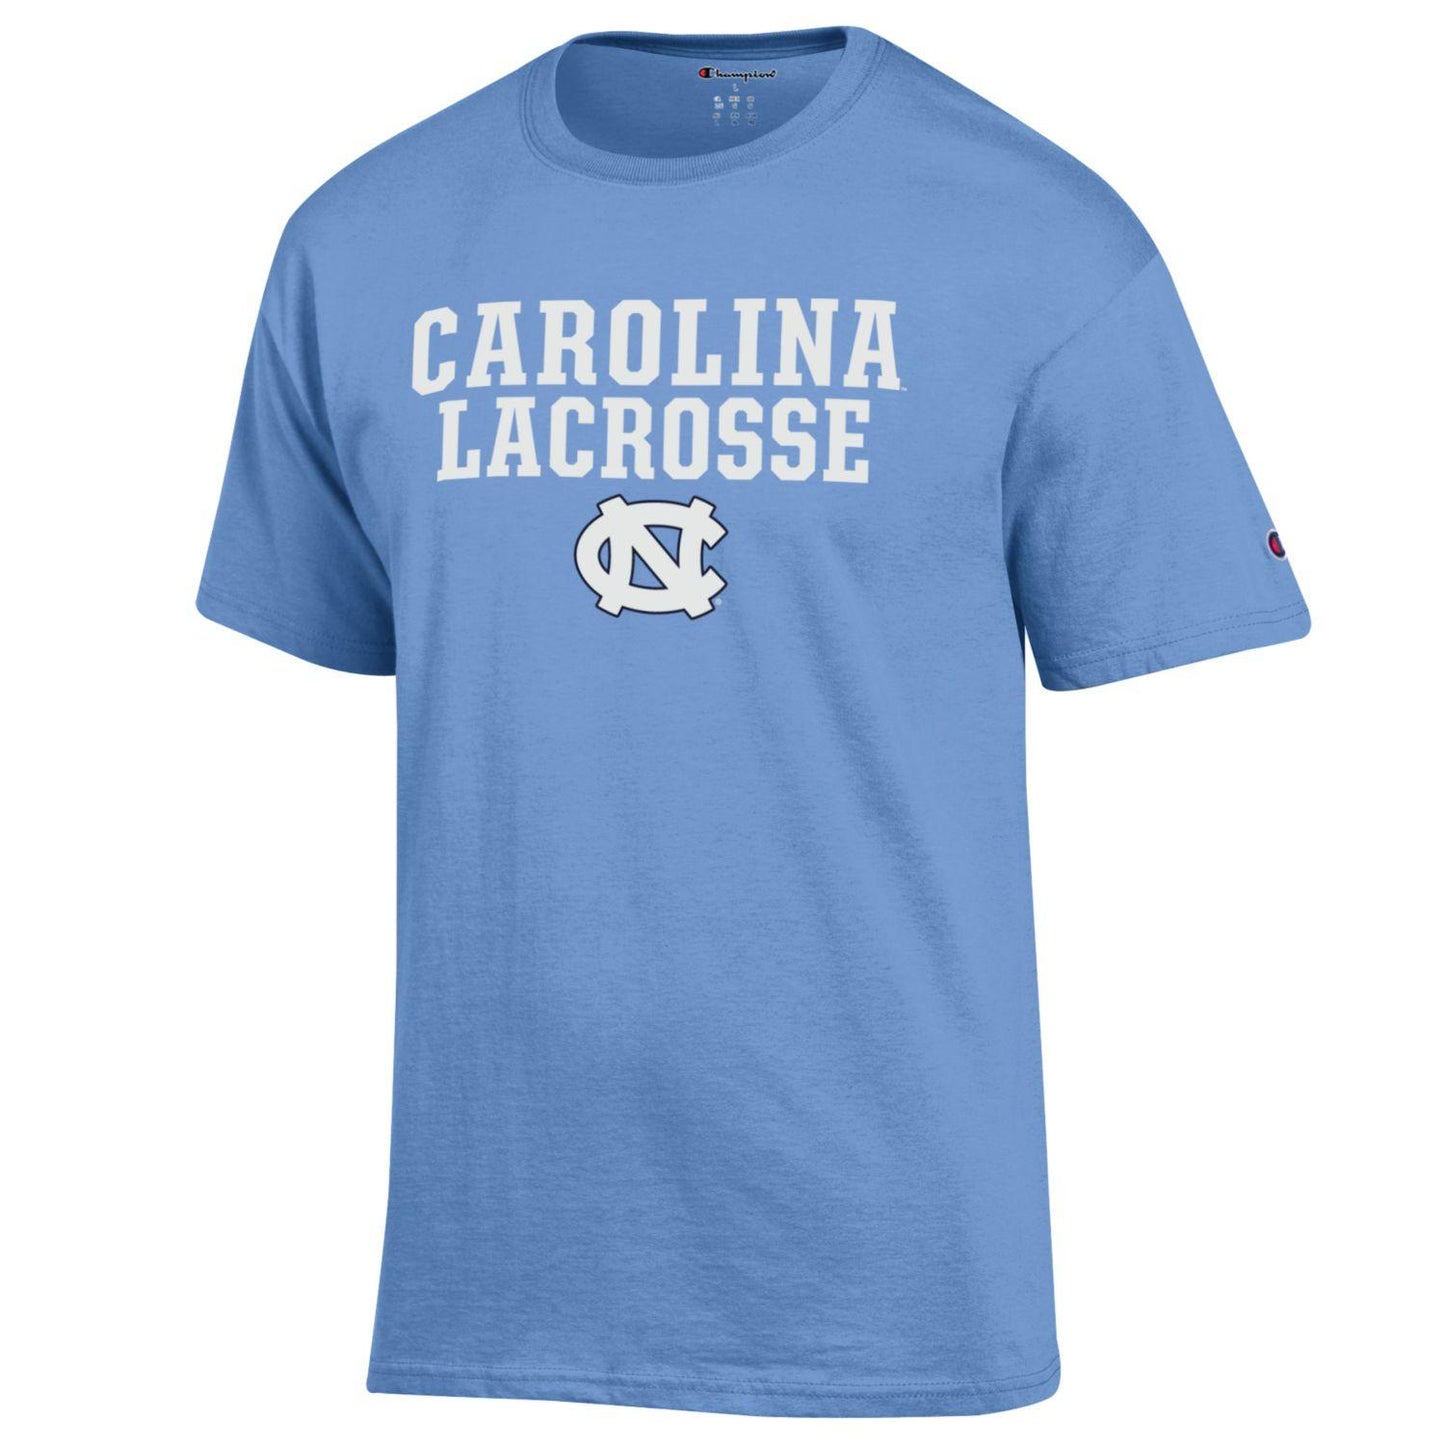 Carolina Lacrosse T-Shirt with UNC Logo by Champion